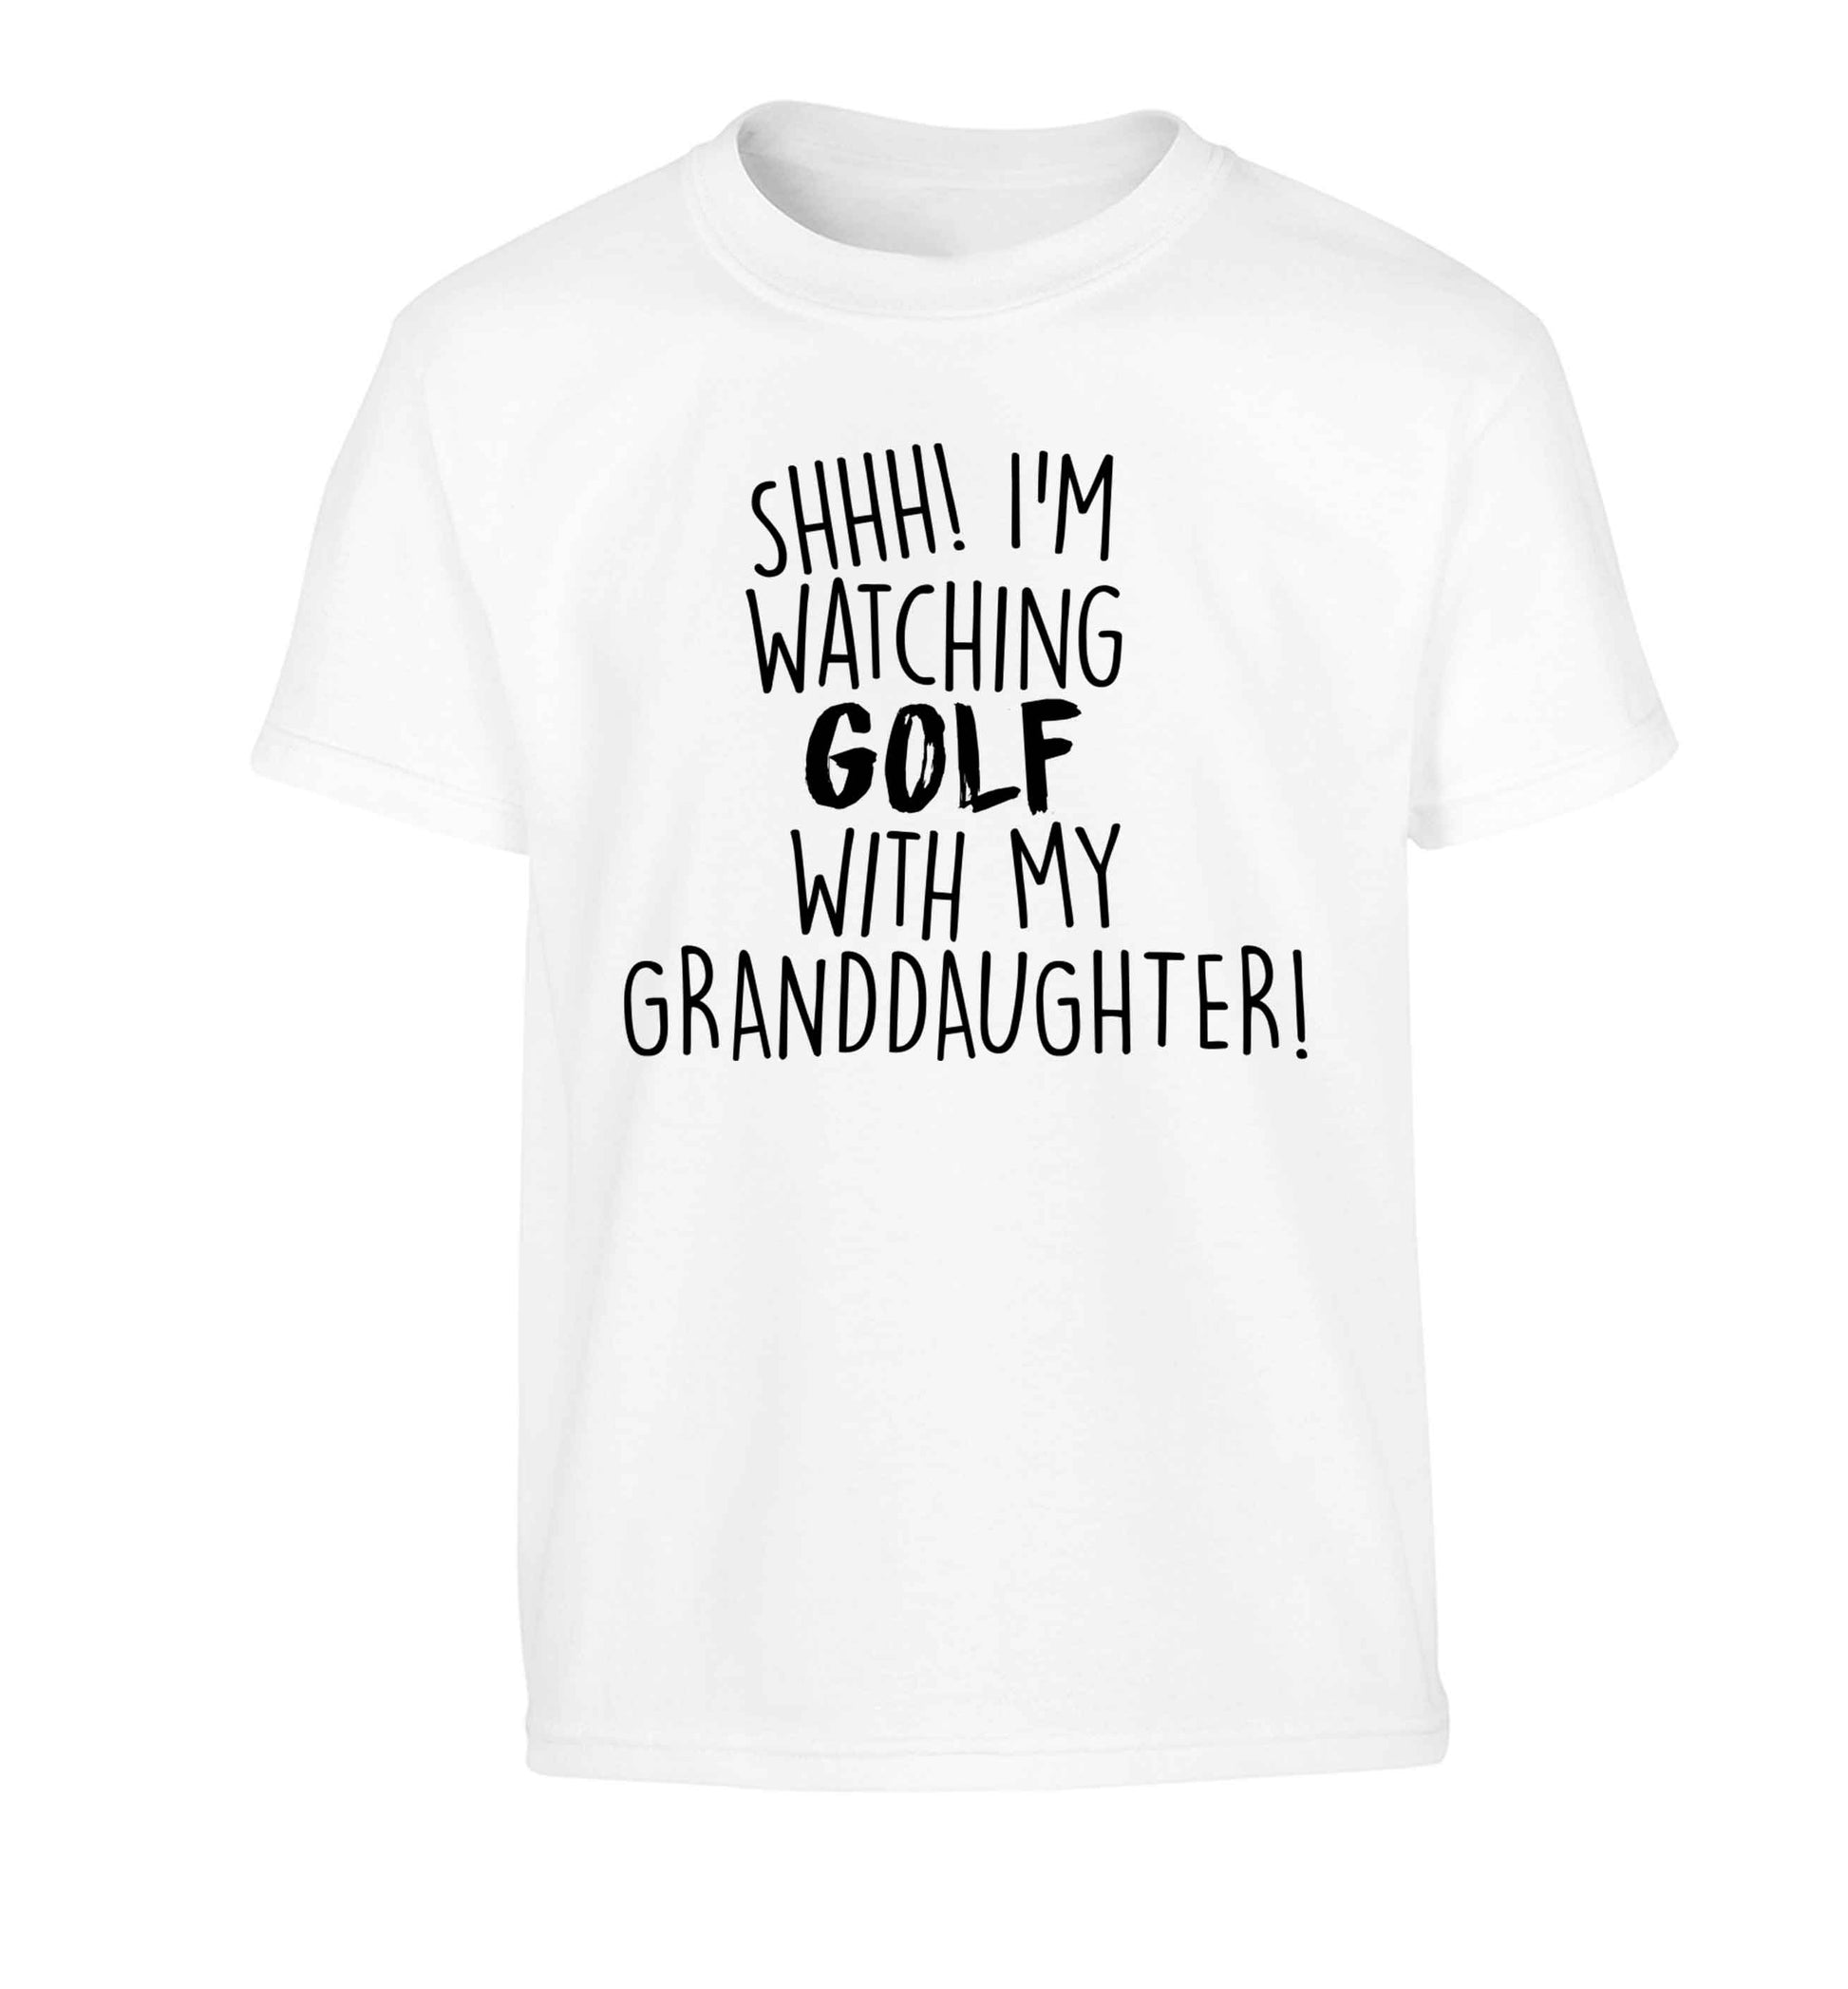 Shh I'm watching golf with my granddaughter Children's white Tshirt 12-13 Years